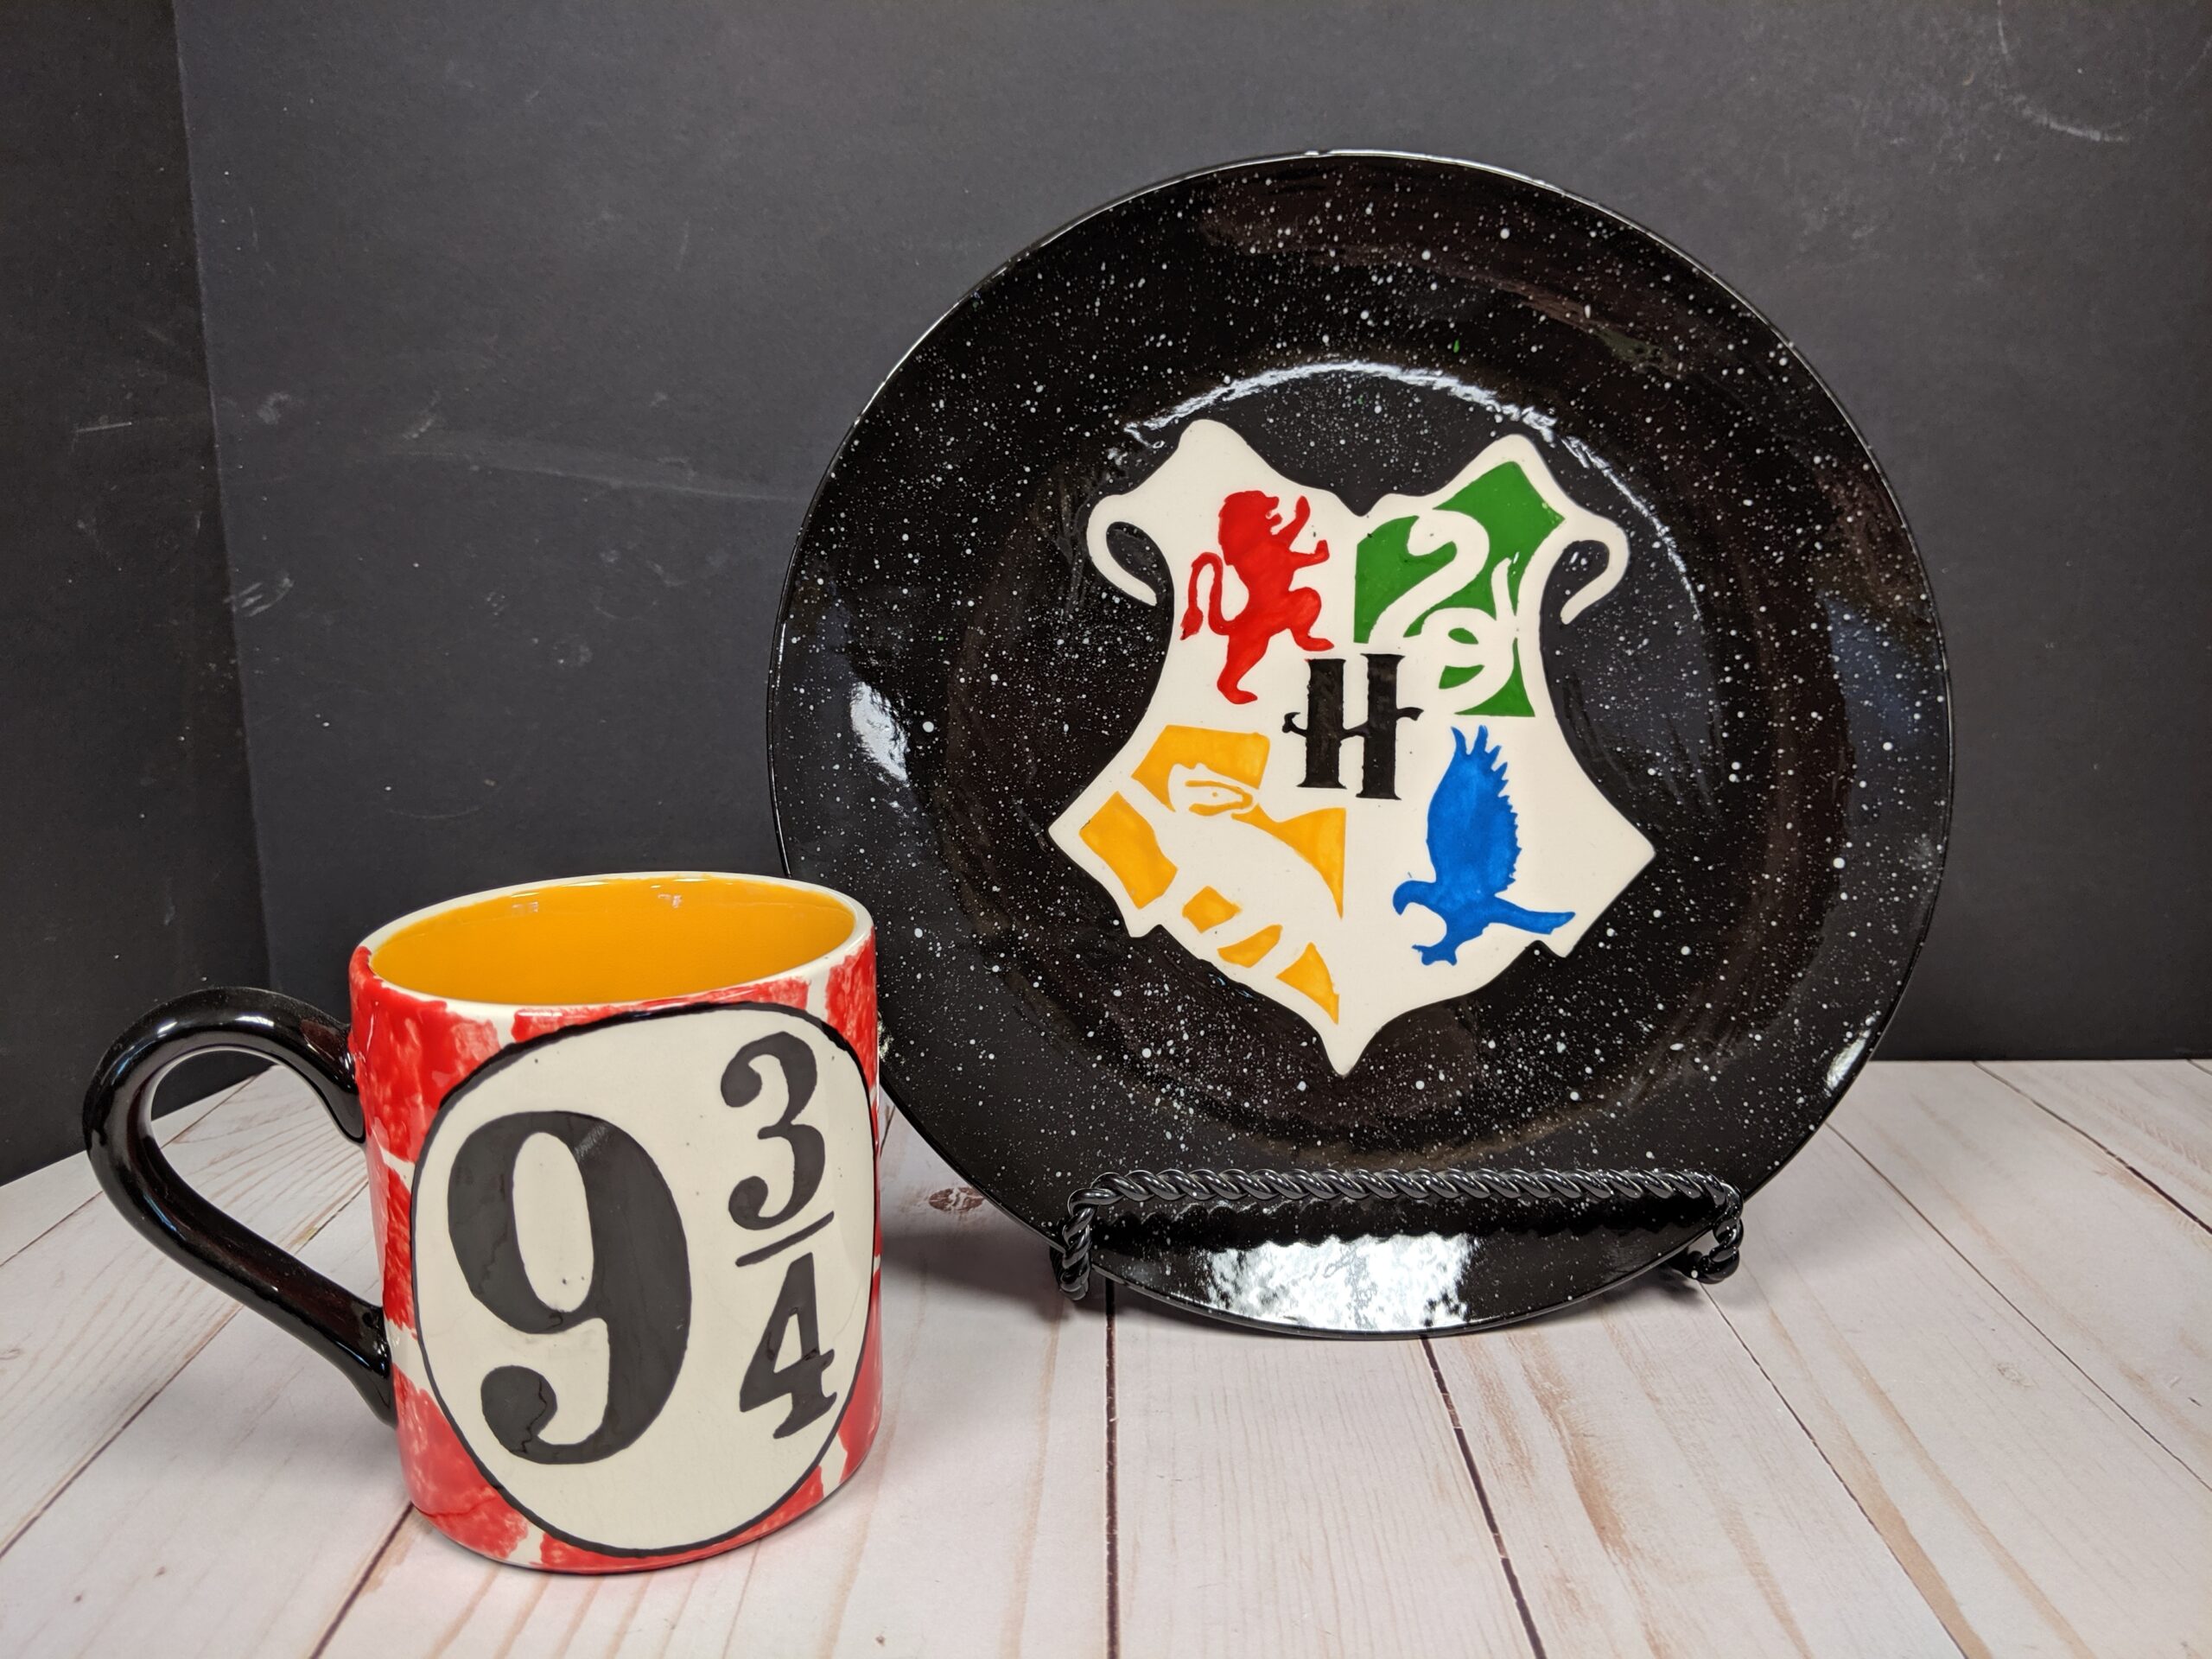 A painted coffee mug and plate